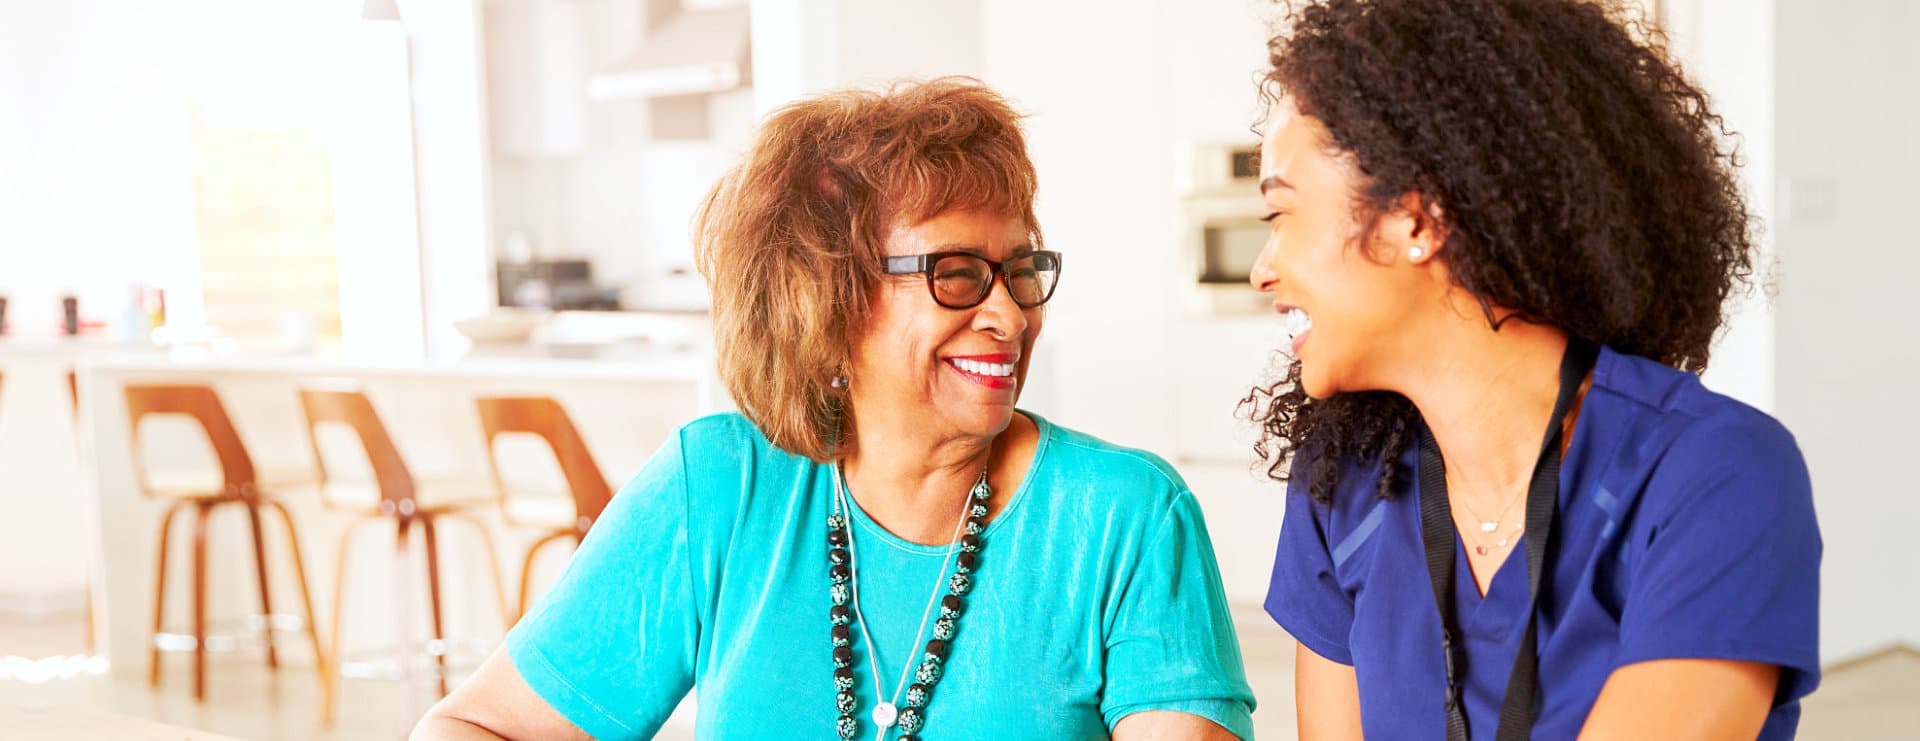 caregiver and senior woman wearing eyeglasses smiling